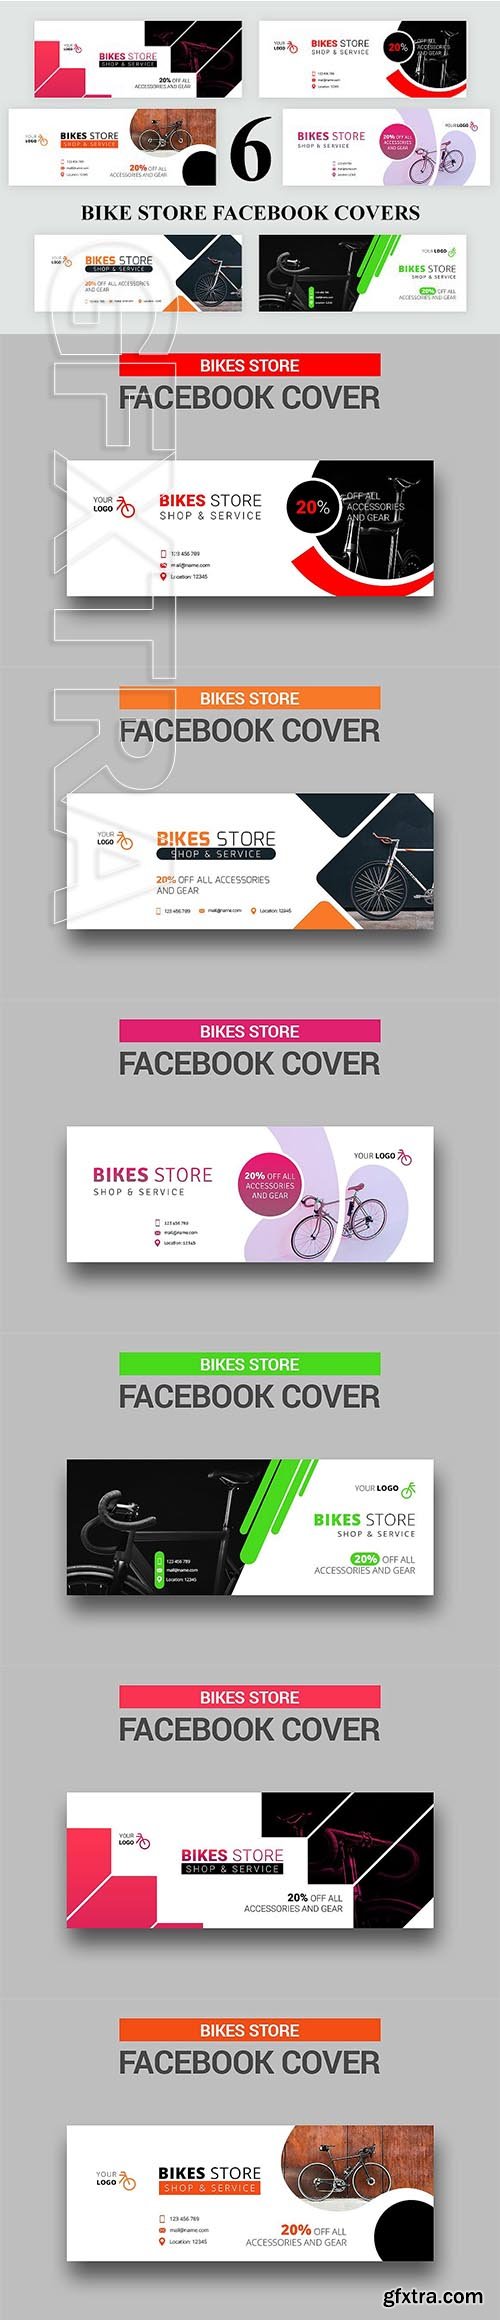 CreativeMarket - Bike Store Facebook Templates 2768106